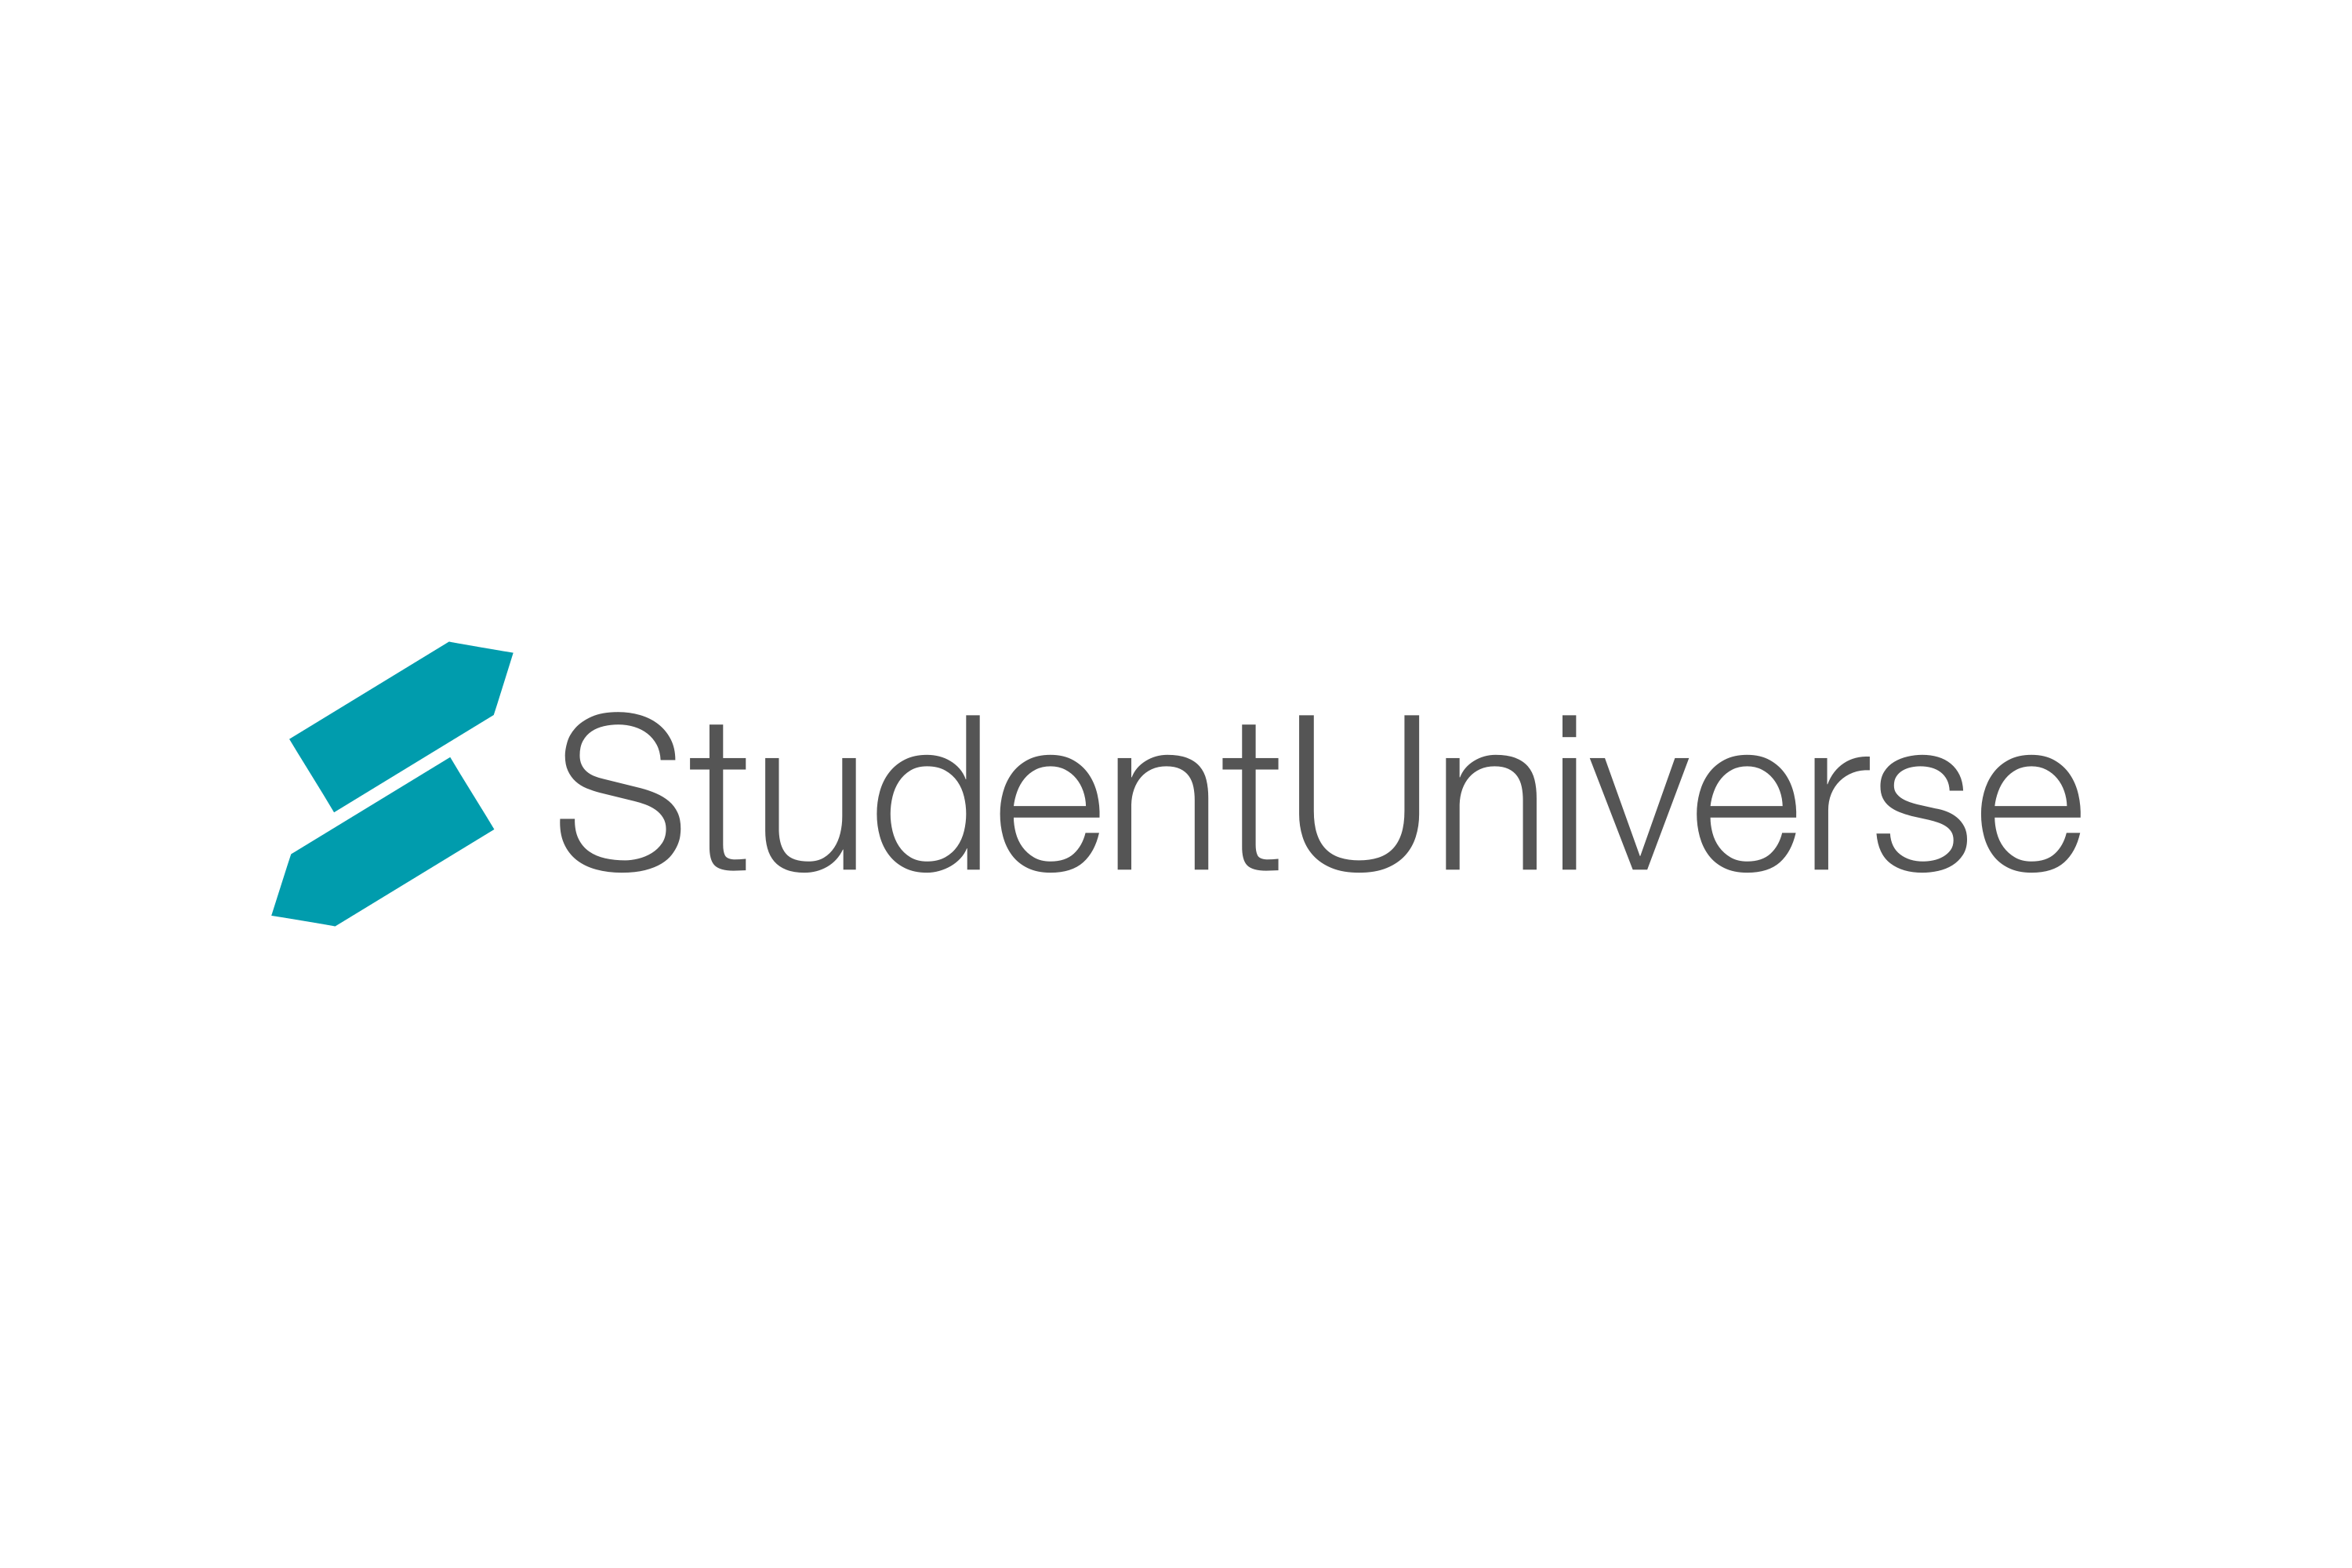 Download StudentUniverse Logo in SVG Vector or PNG File Format - Logo.wine